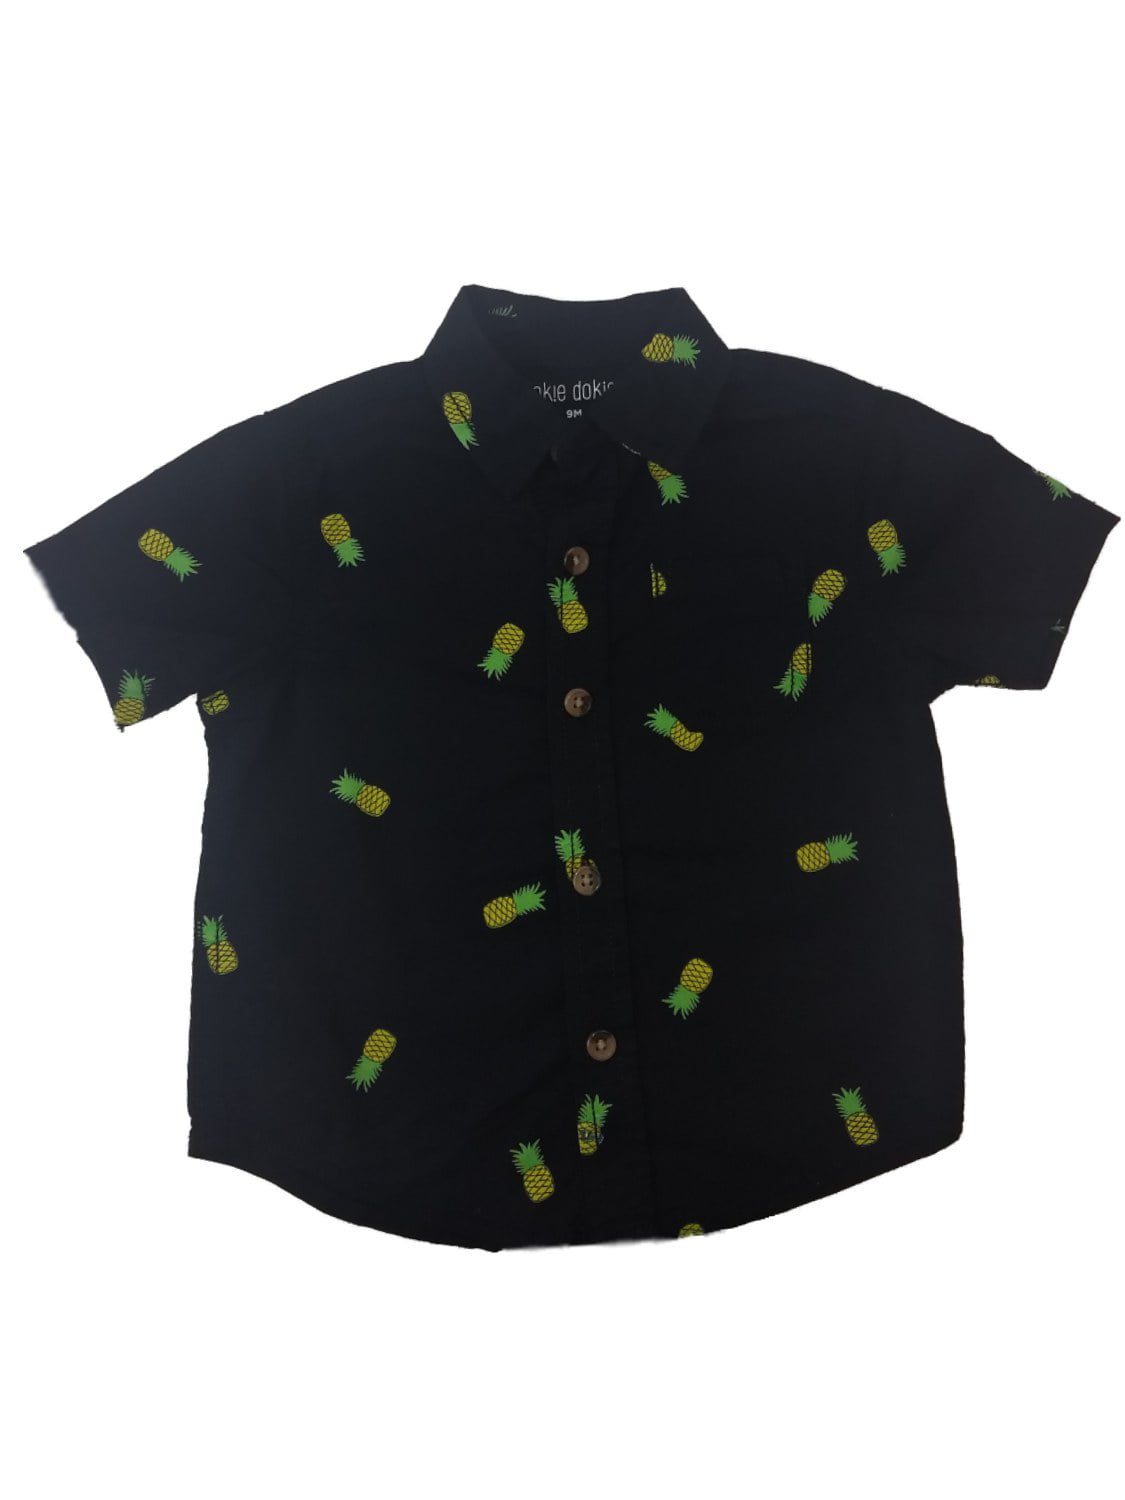 infant black dress shirt